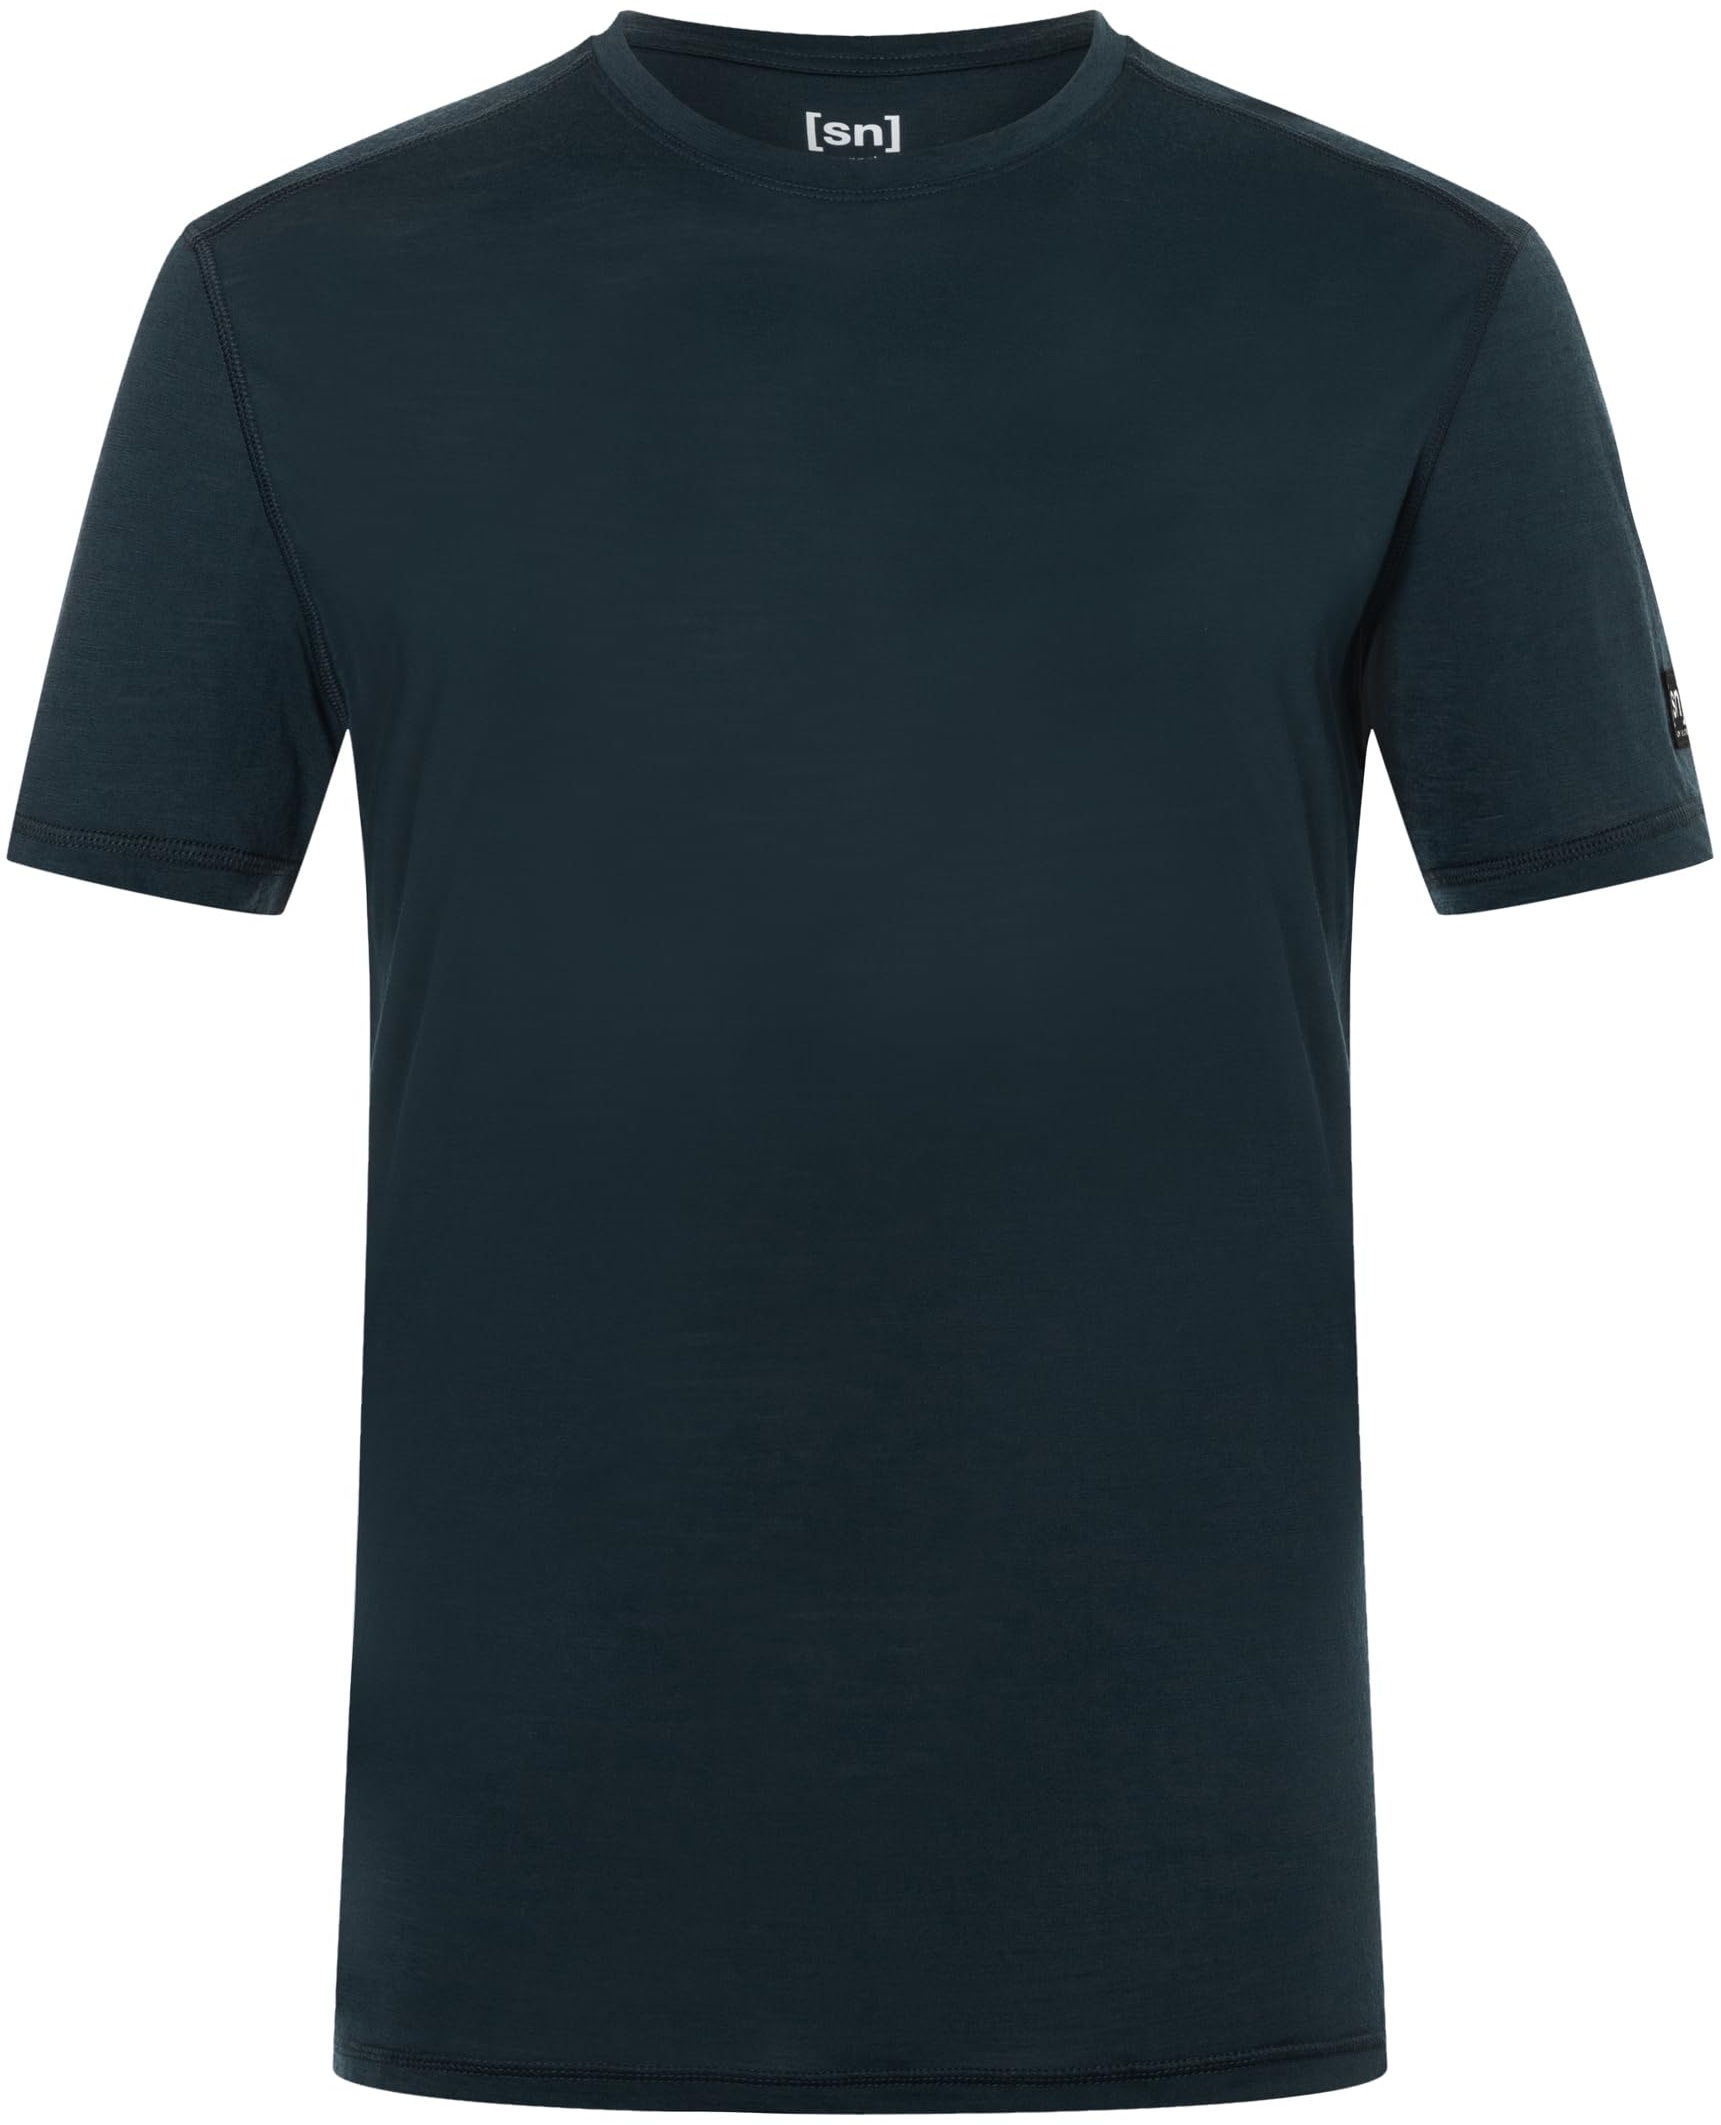 super.natural Herren M Sierra140 Tee T-Shirt, Blau, XL EU